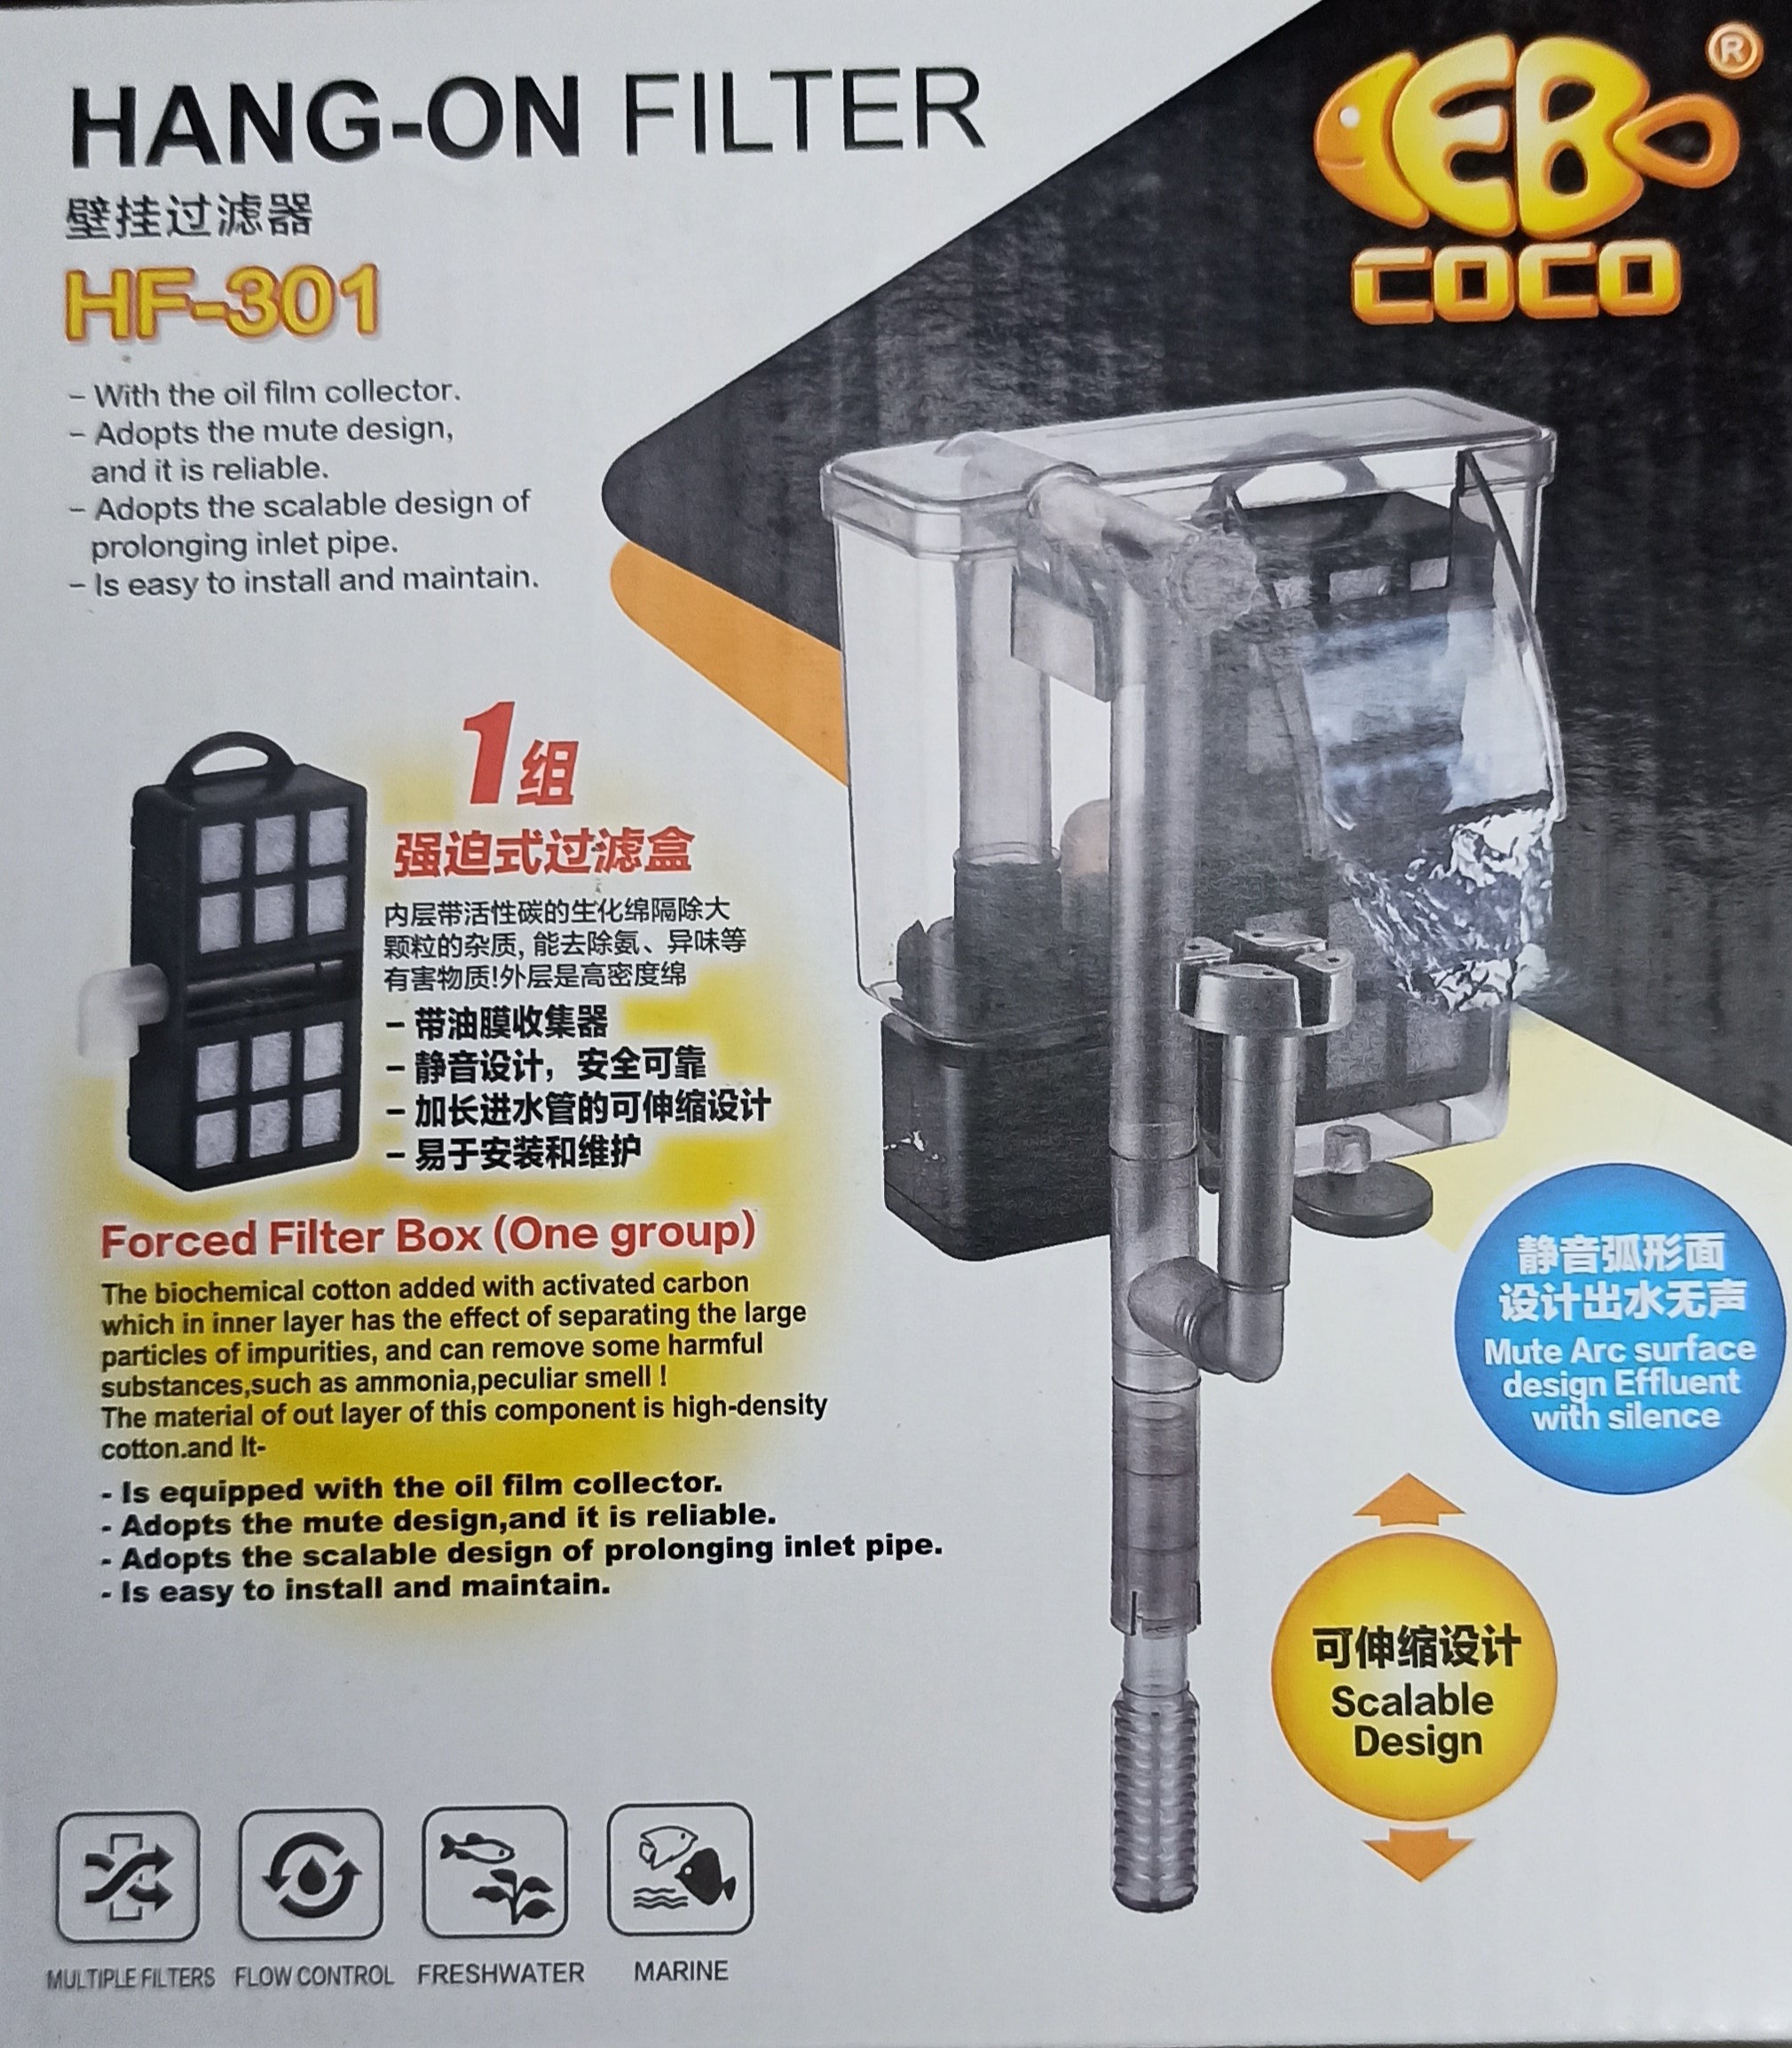 JEBO CoCo HF-301 Hang-On Filter